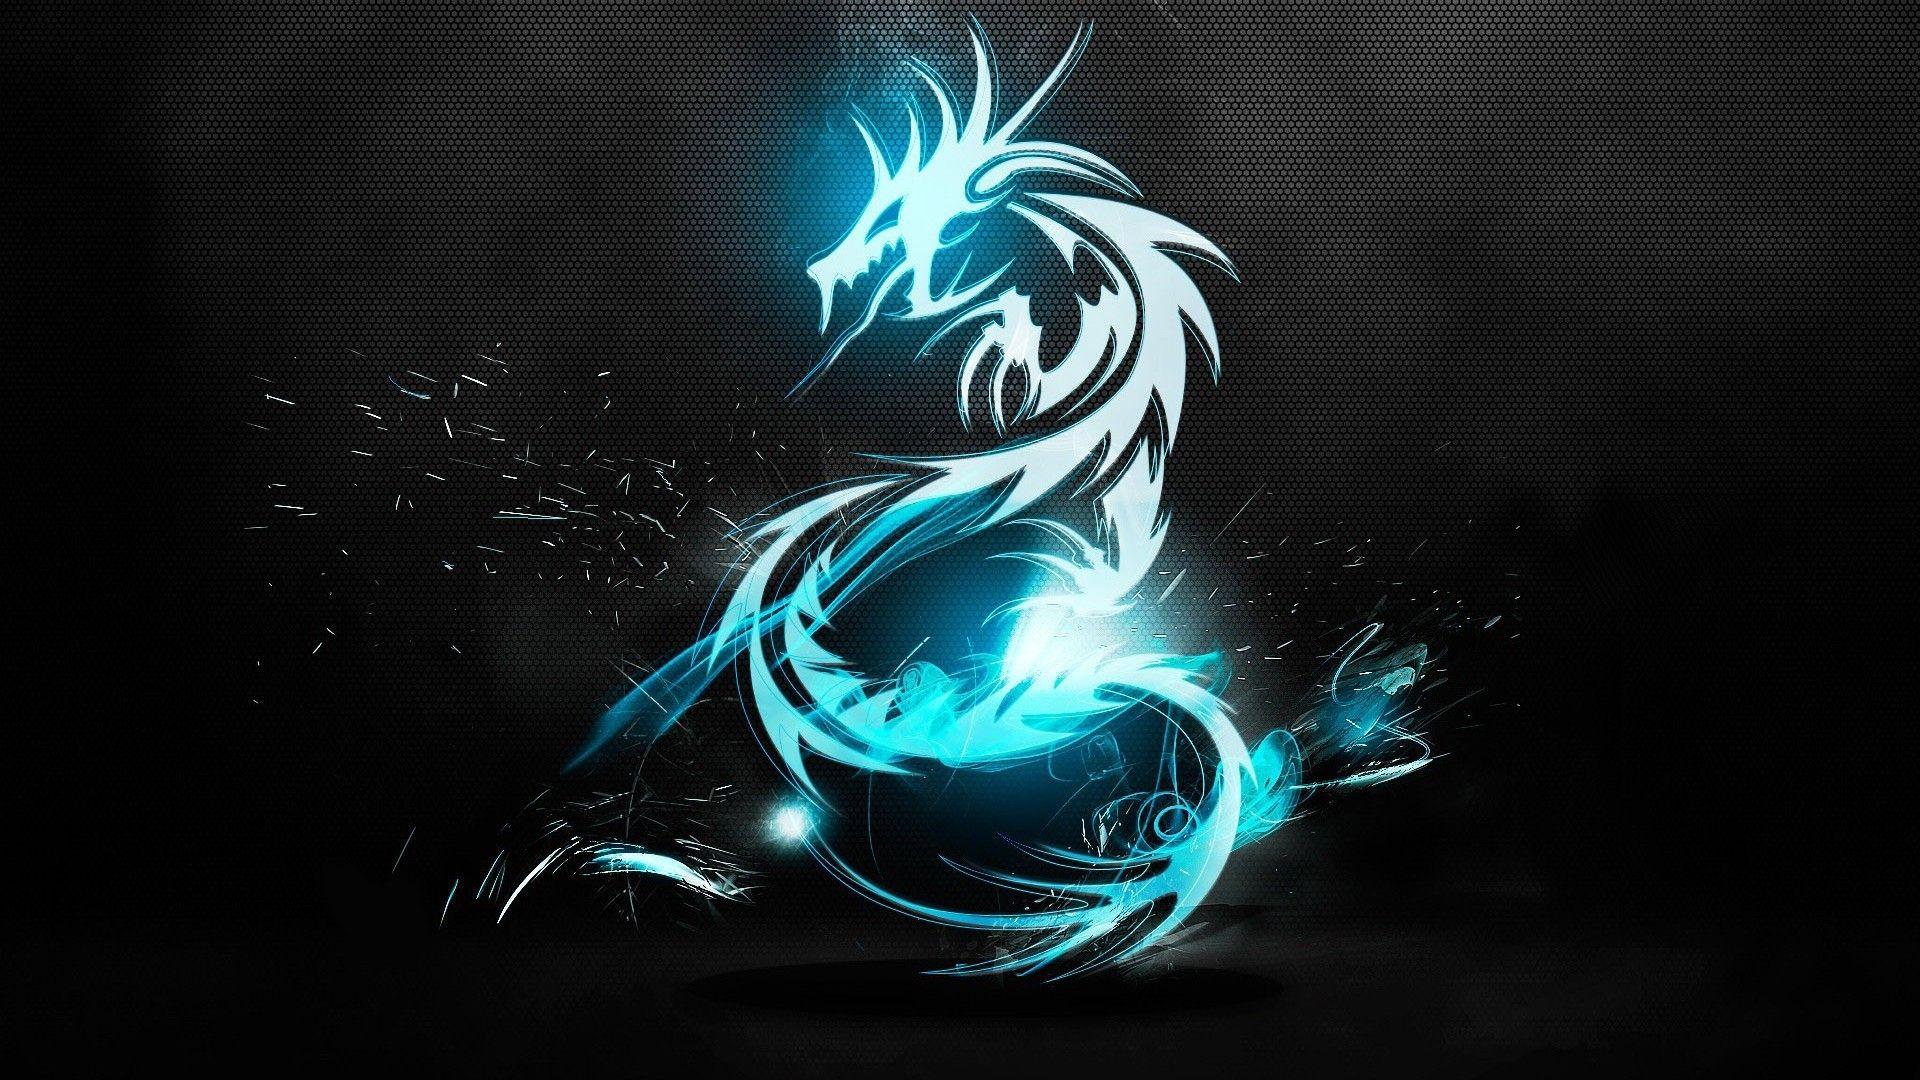 Epic Dragon Logo - wallpaper.wiki-Ice-Dragon-Images-PIC-WPE003618 | wallpaper.wiki